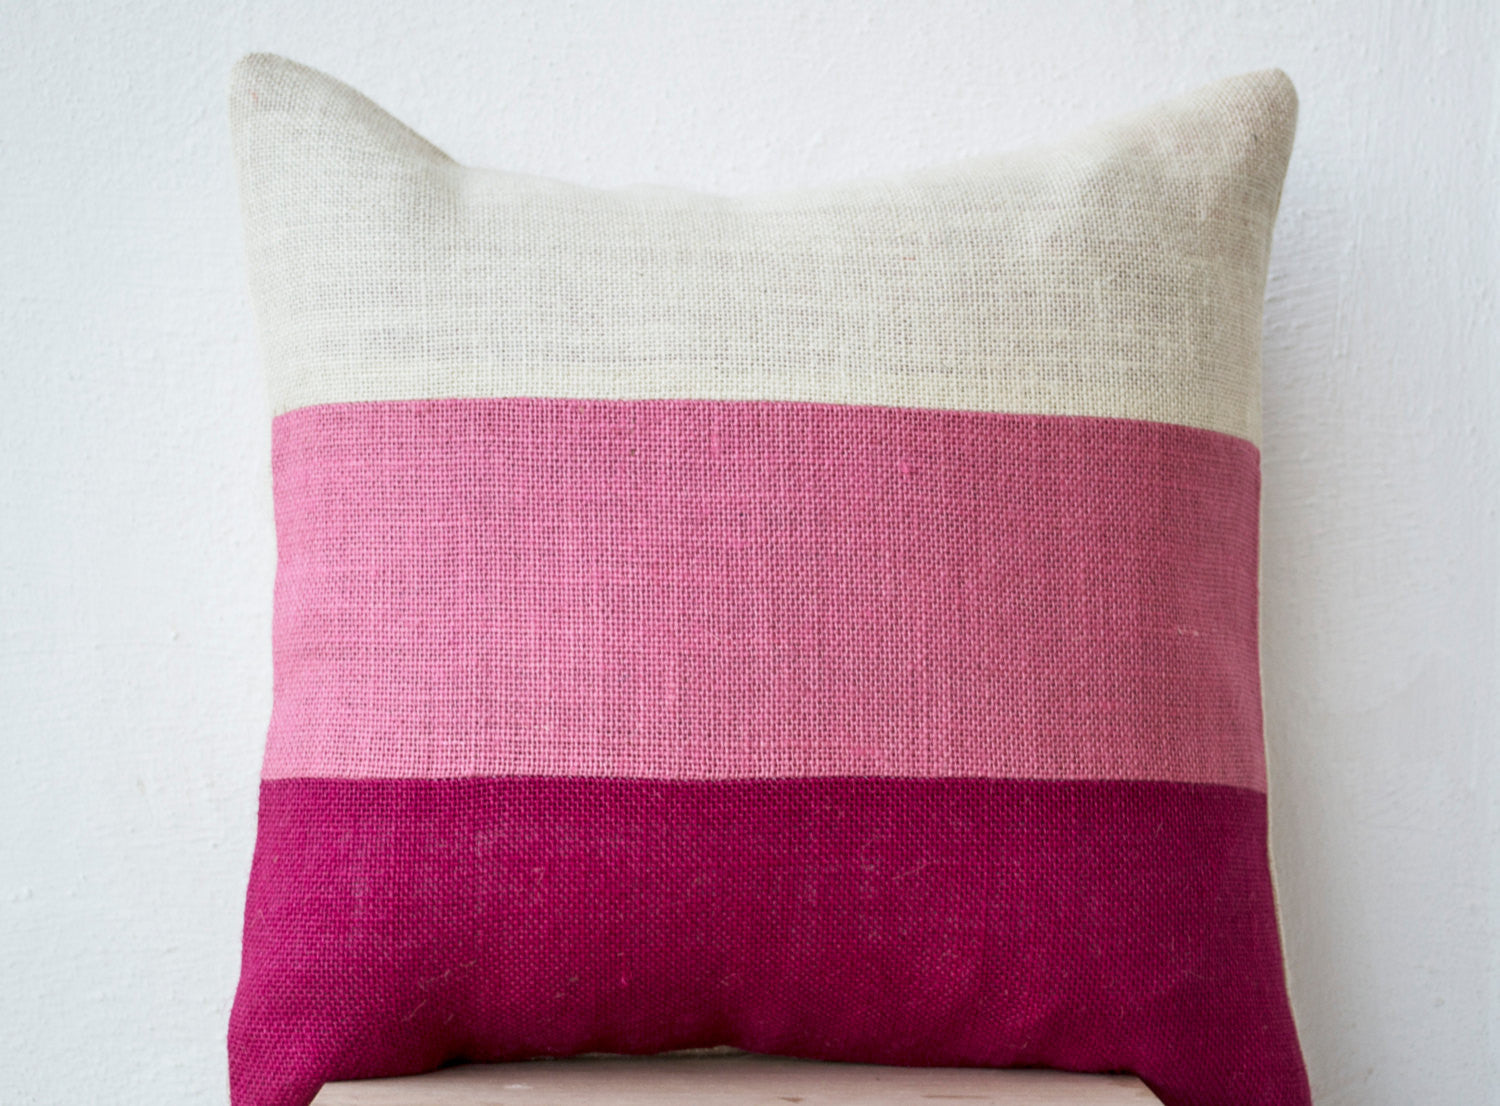 Handmade burlap pink throw pillow with color block